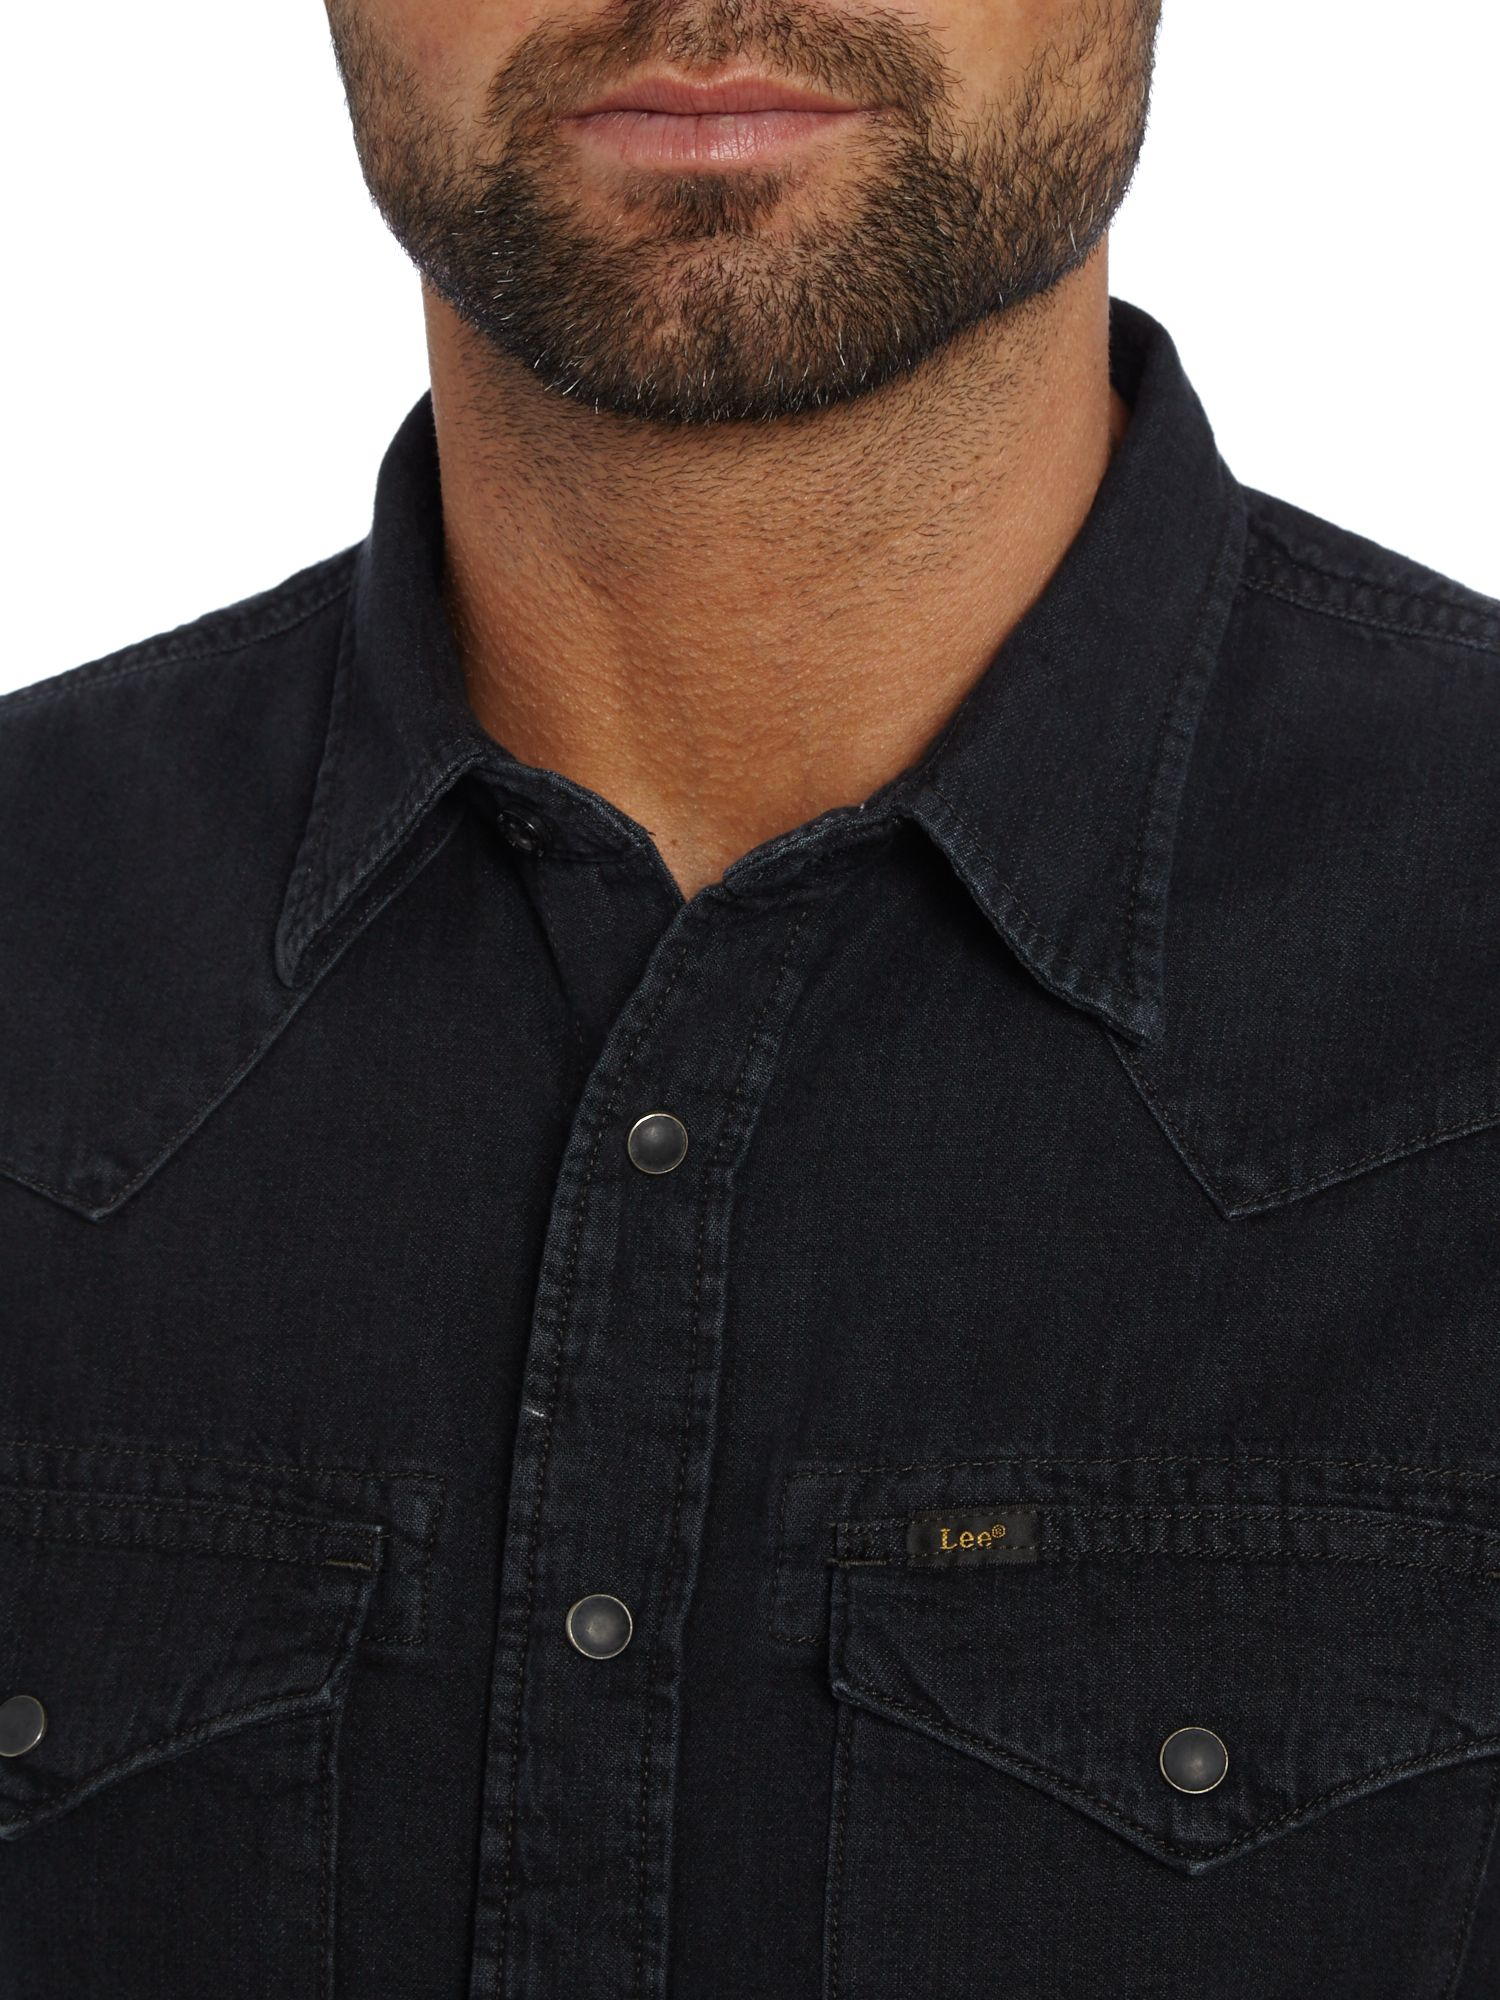 Lee Black Slim Fit Pitch Black Denim Western Shirt Product 3 774223064 Normal 